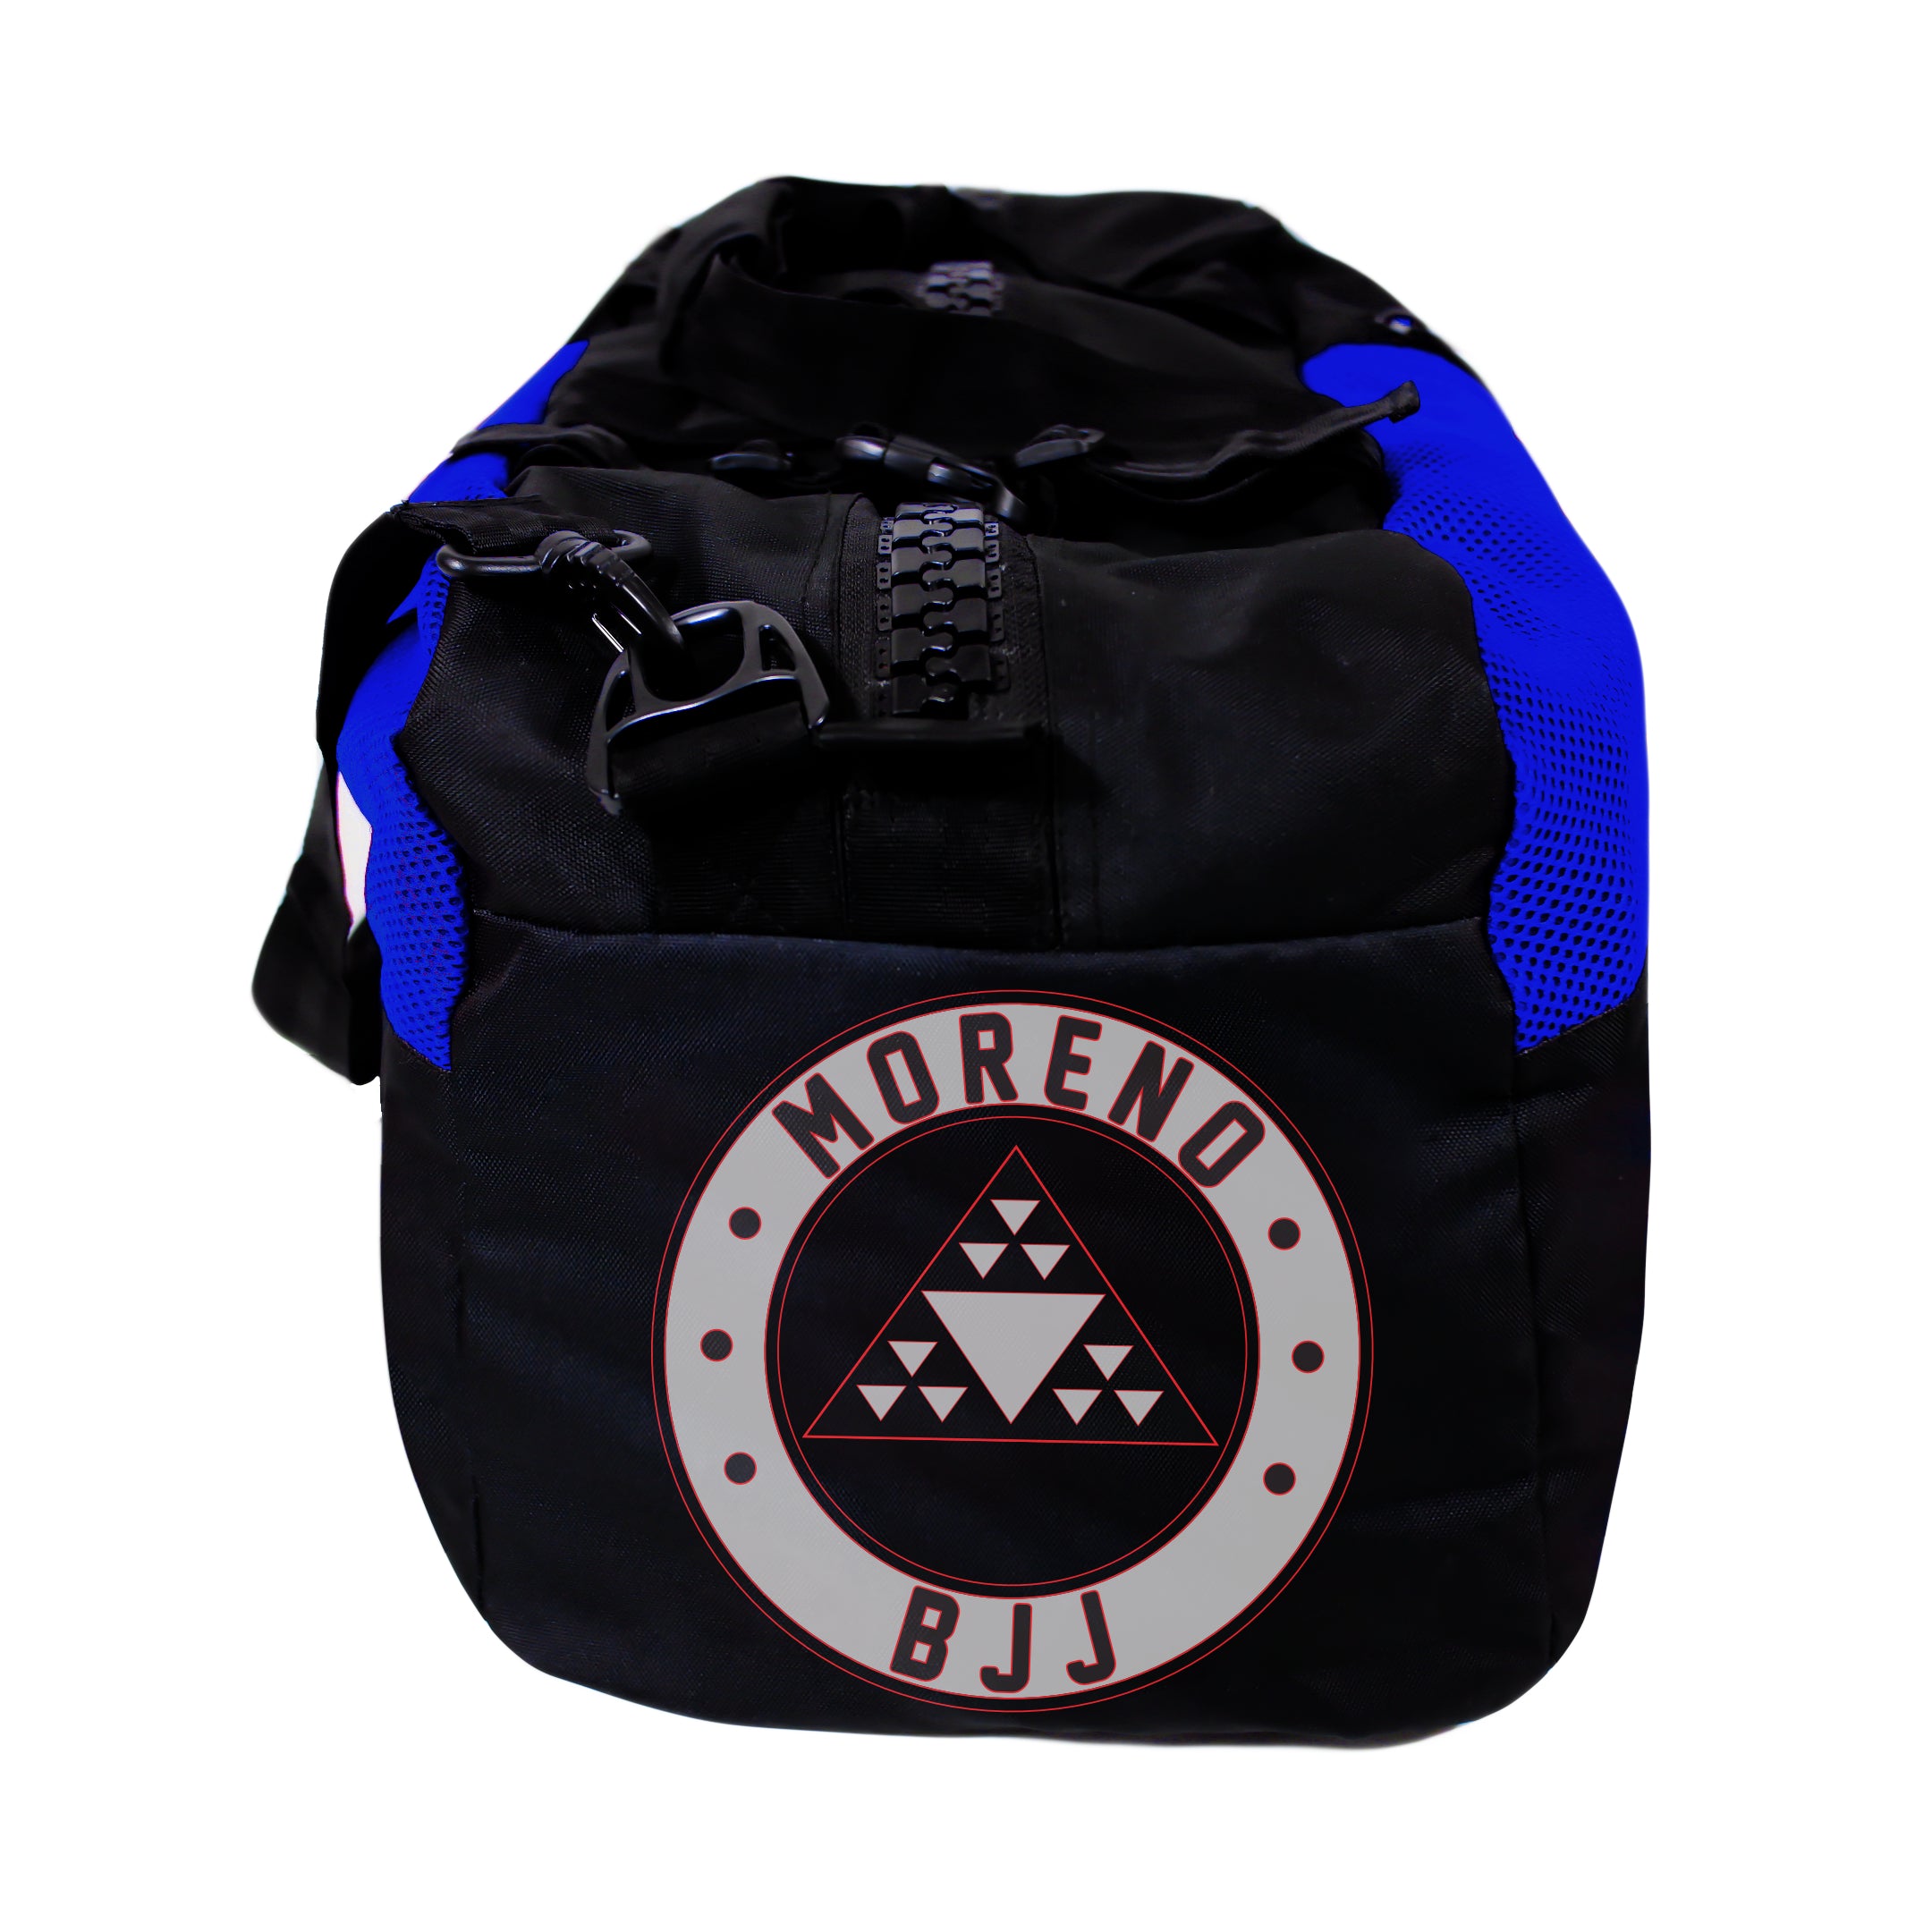 Moreno BJJ Gear Bag (Blue)